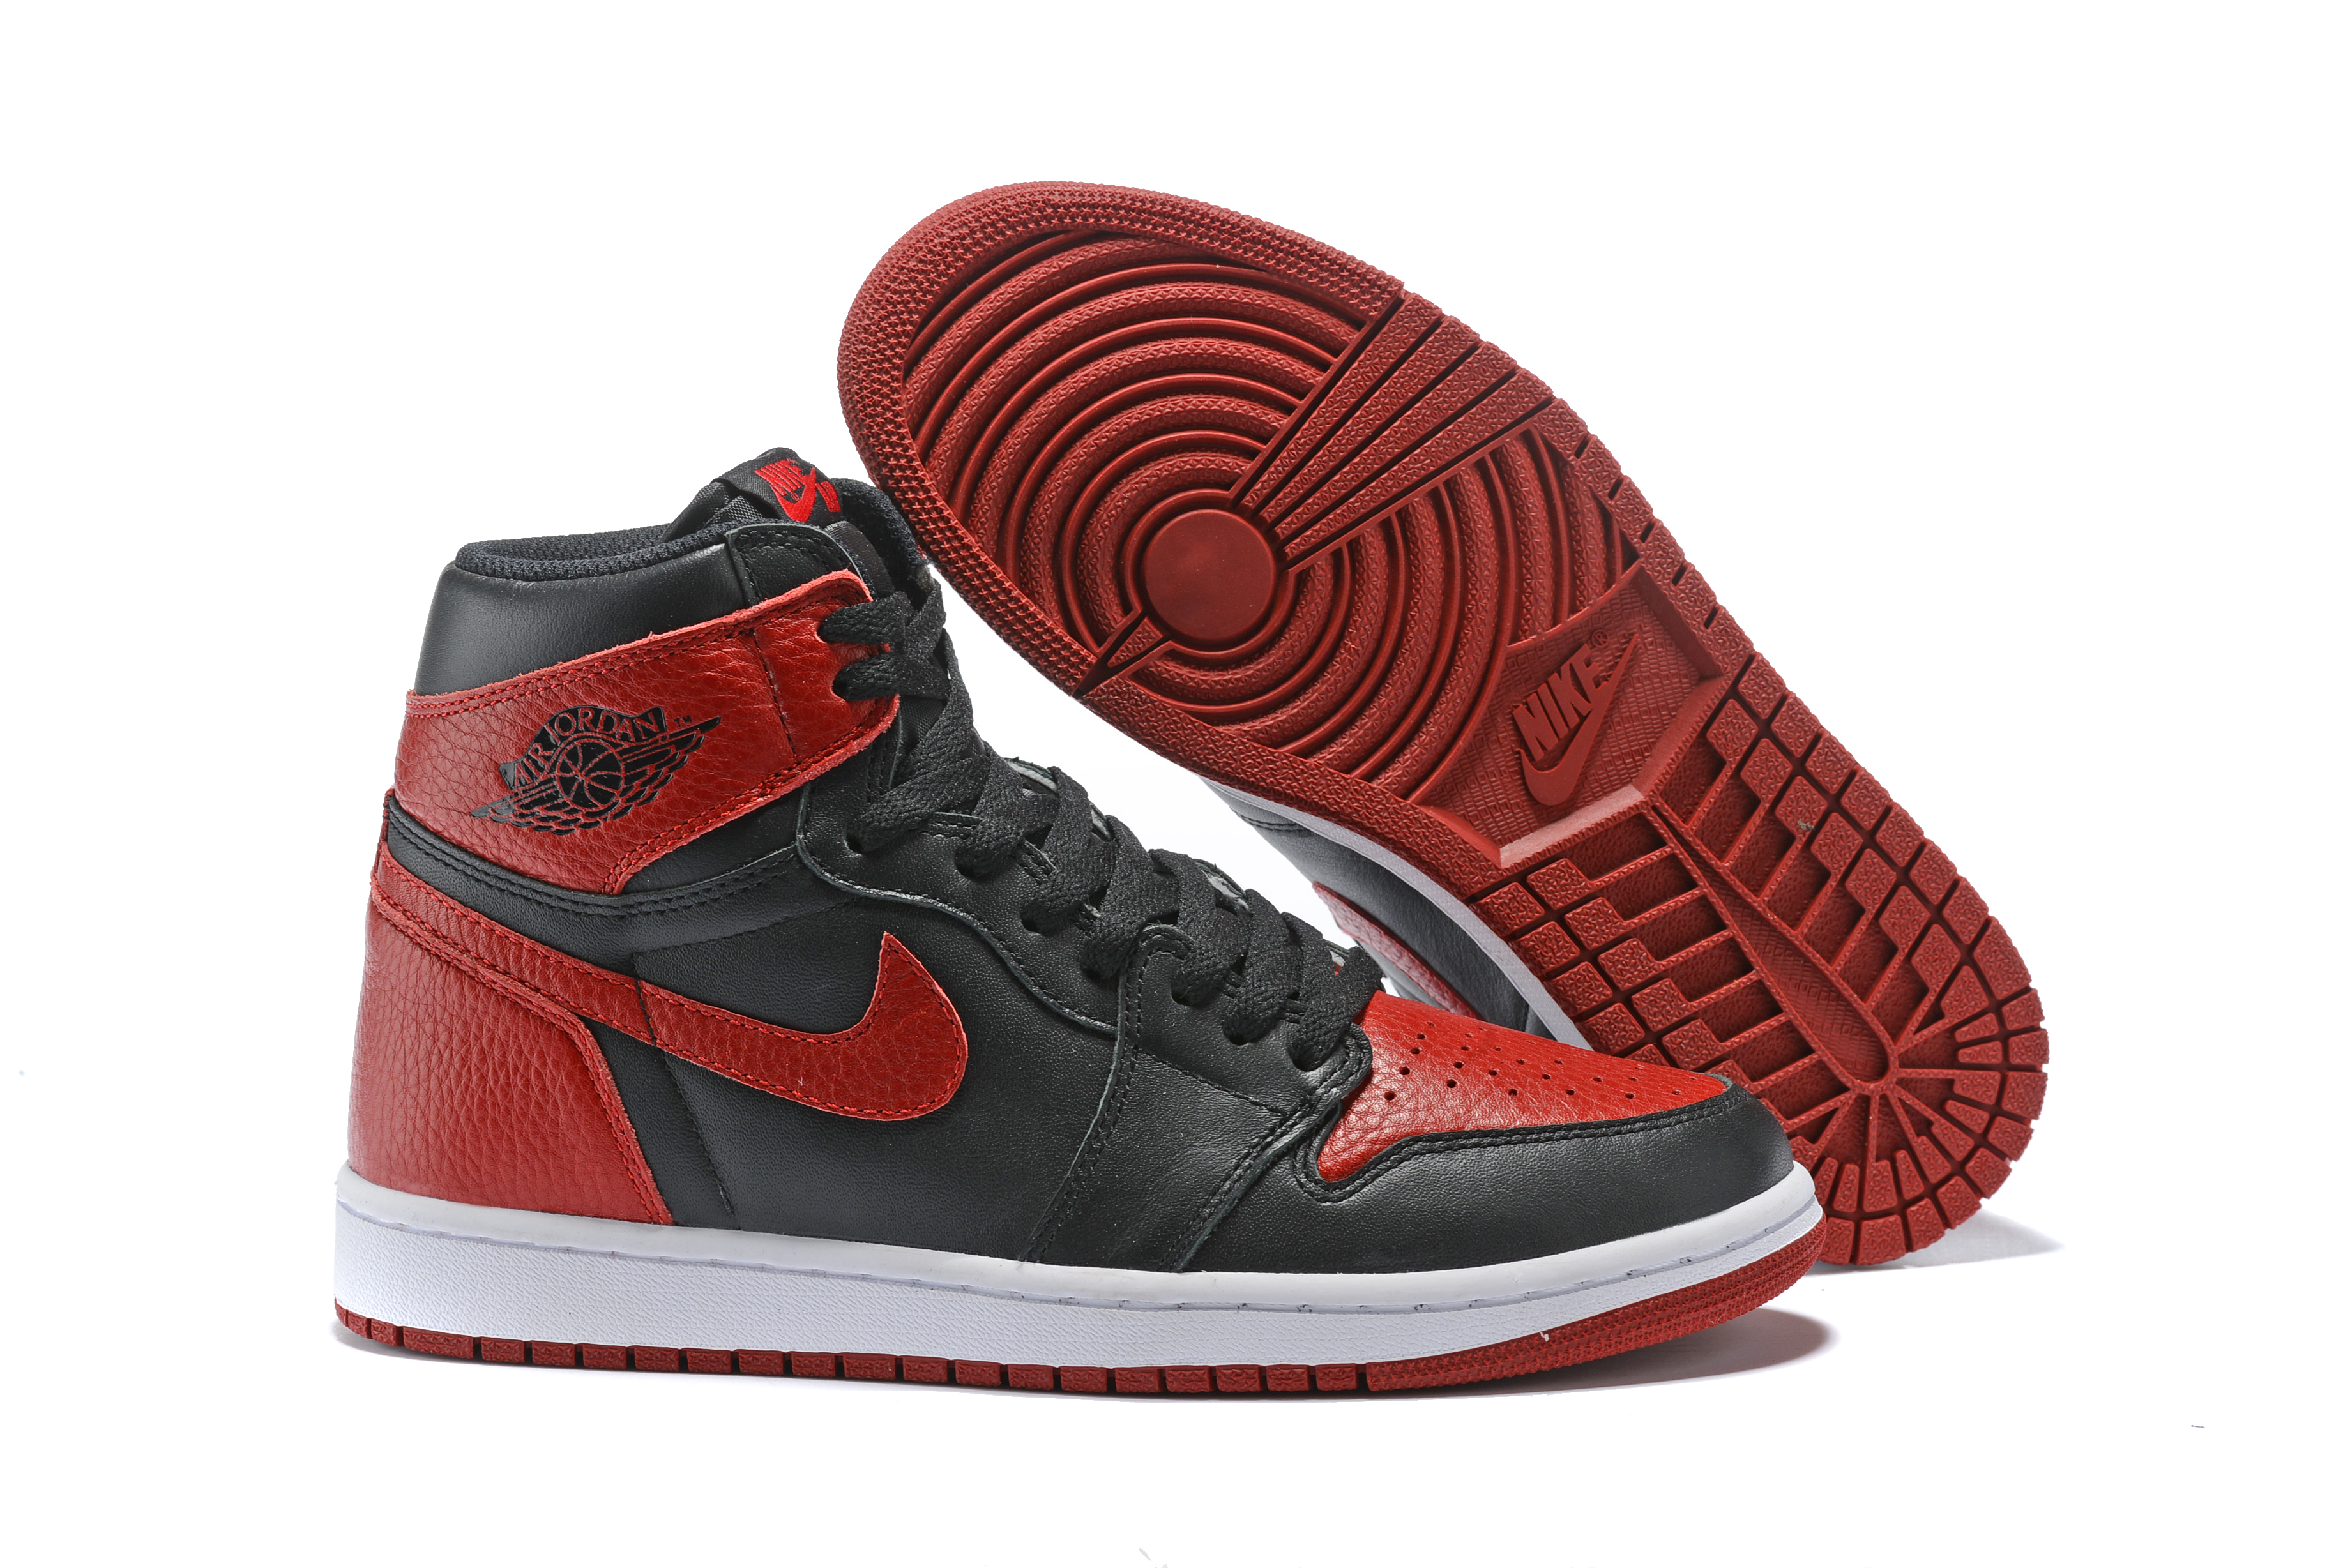 Real Air Jordans 1 Split Leather Black Red Shoes